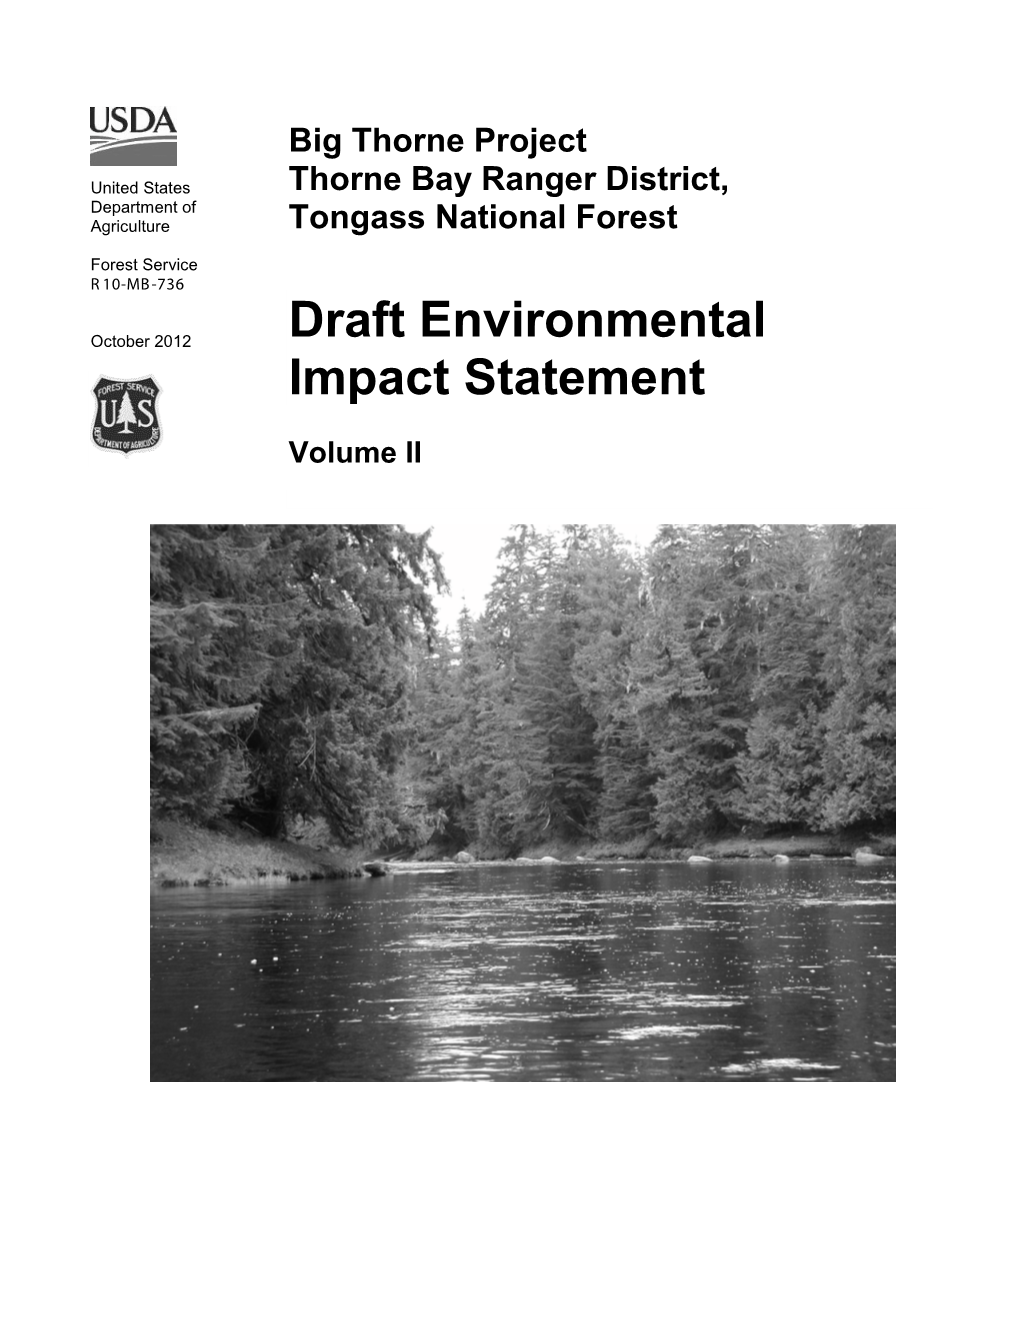 Big Thorne Project Draft Environmental Impact Statement